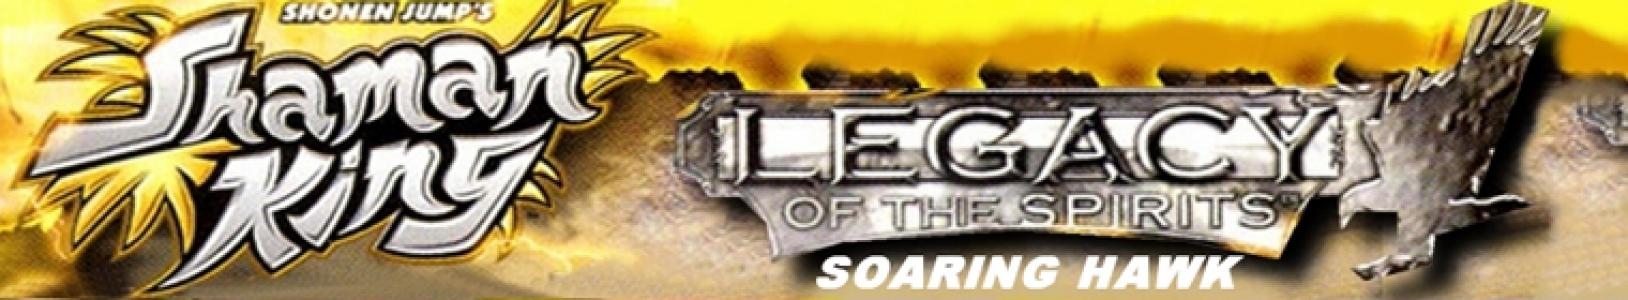 Shonen Jump's Shaman King: Legacy of the Spirits, Soaring Hawk banner